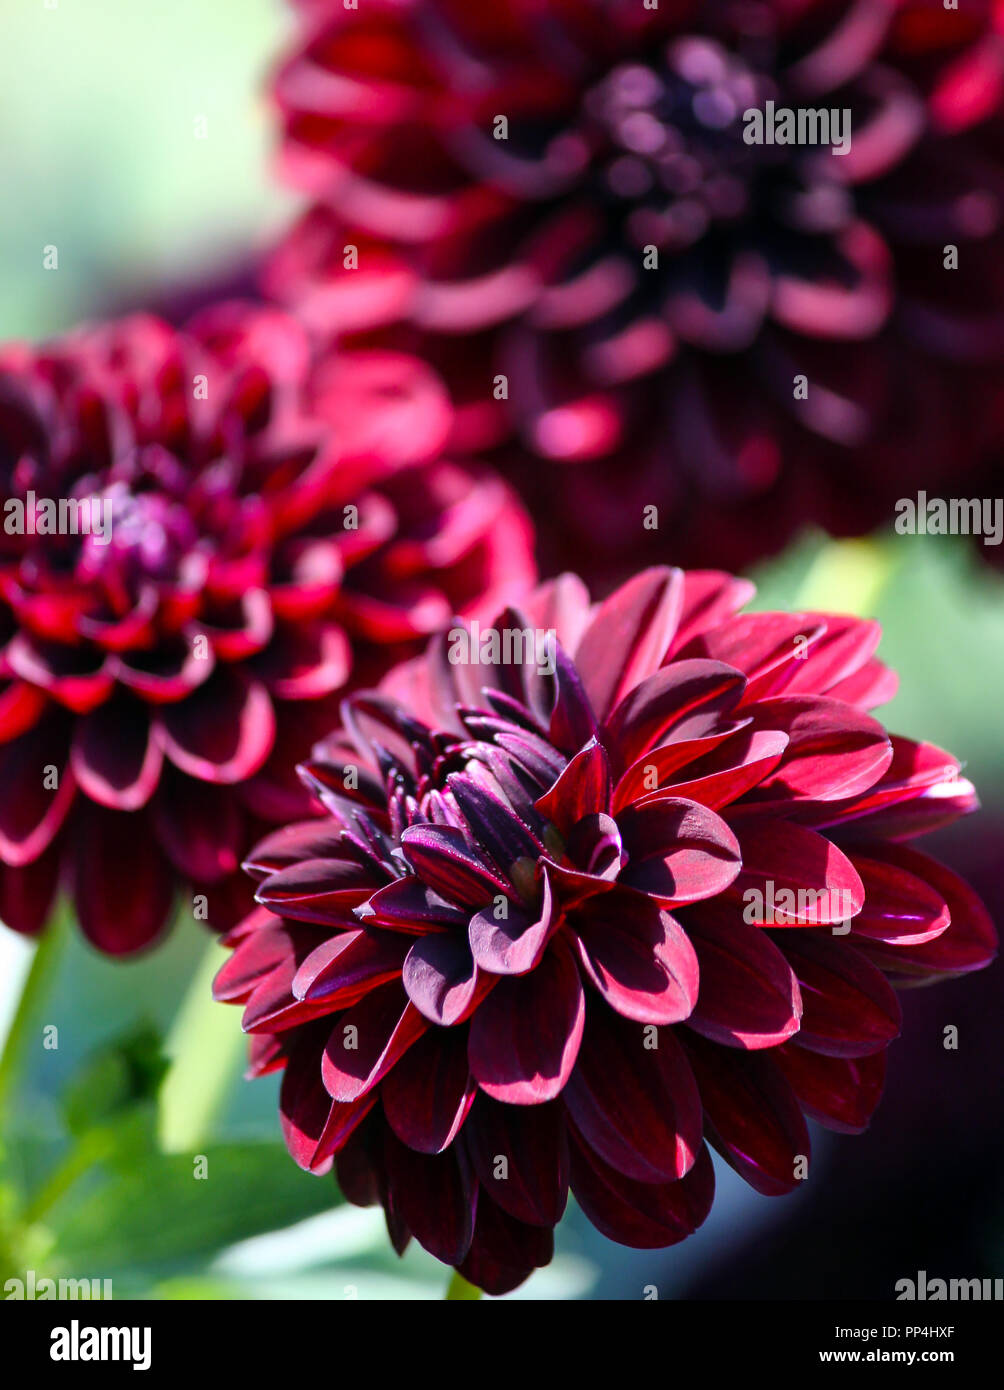 variety  of chrysanthemum fidalgo blacky asteraceae plant, three large dark purple flower with pinkish and whitish spot,  foliage of the plant Stock Photo